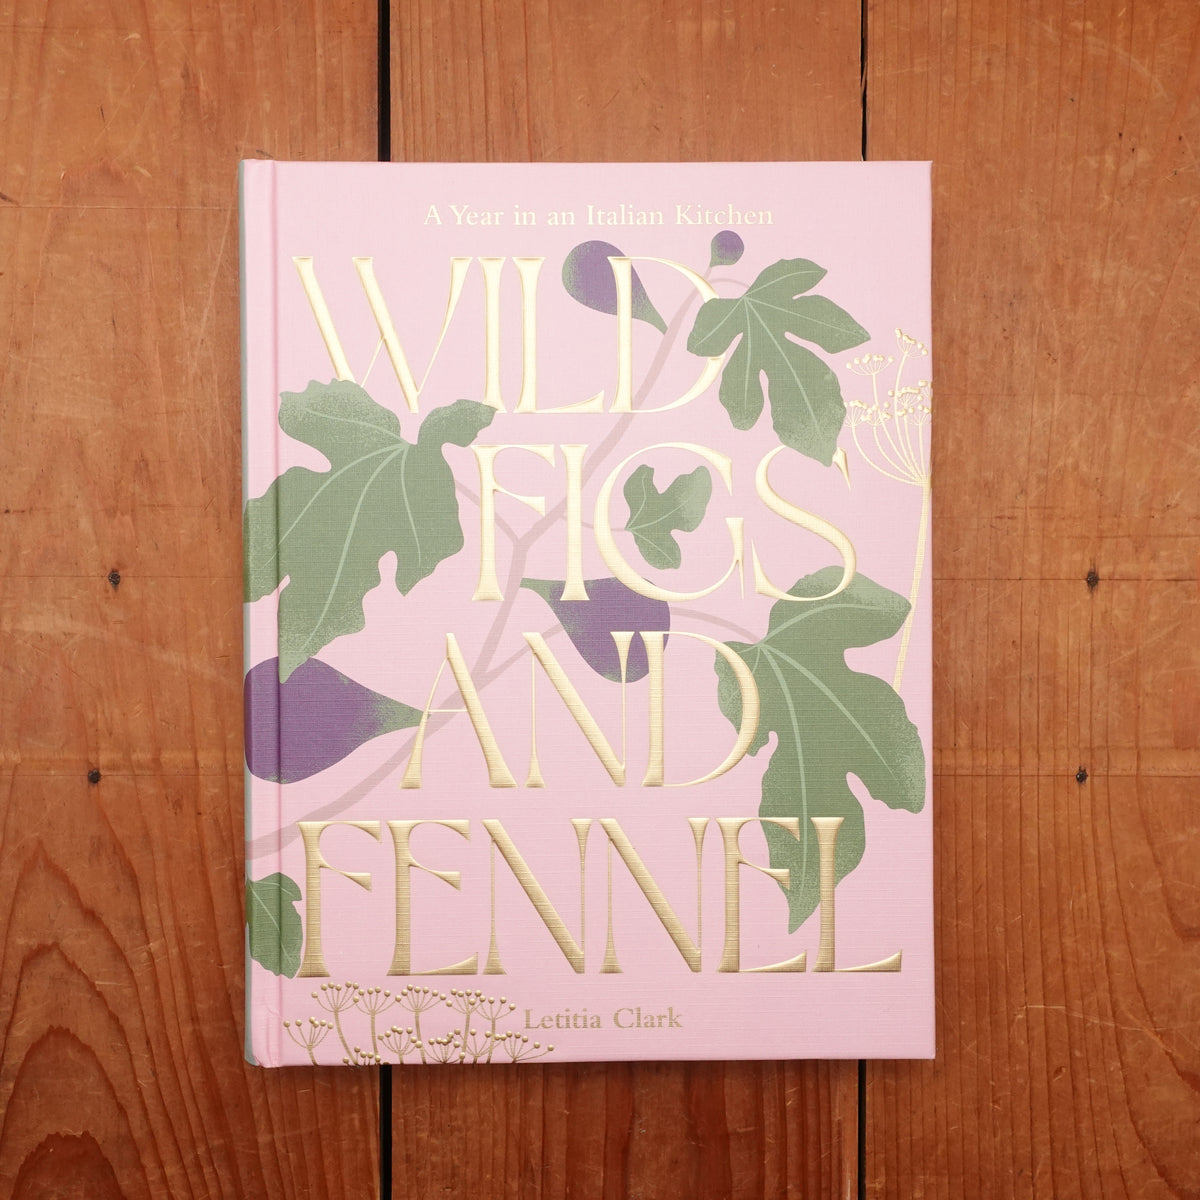 Wild Figs and Fennel - Letitia Clark